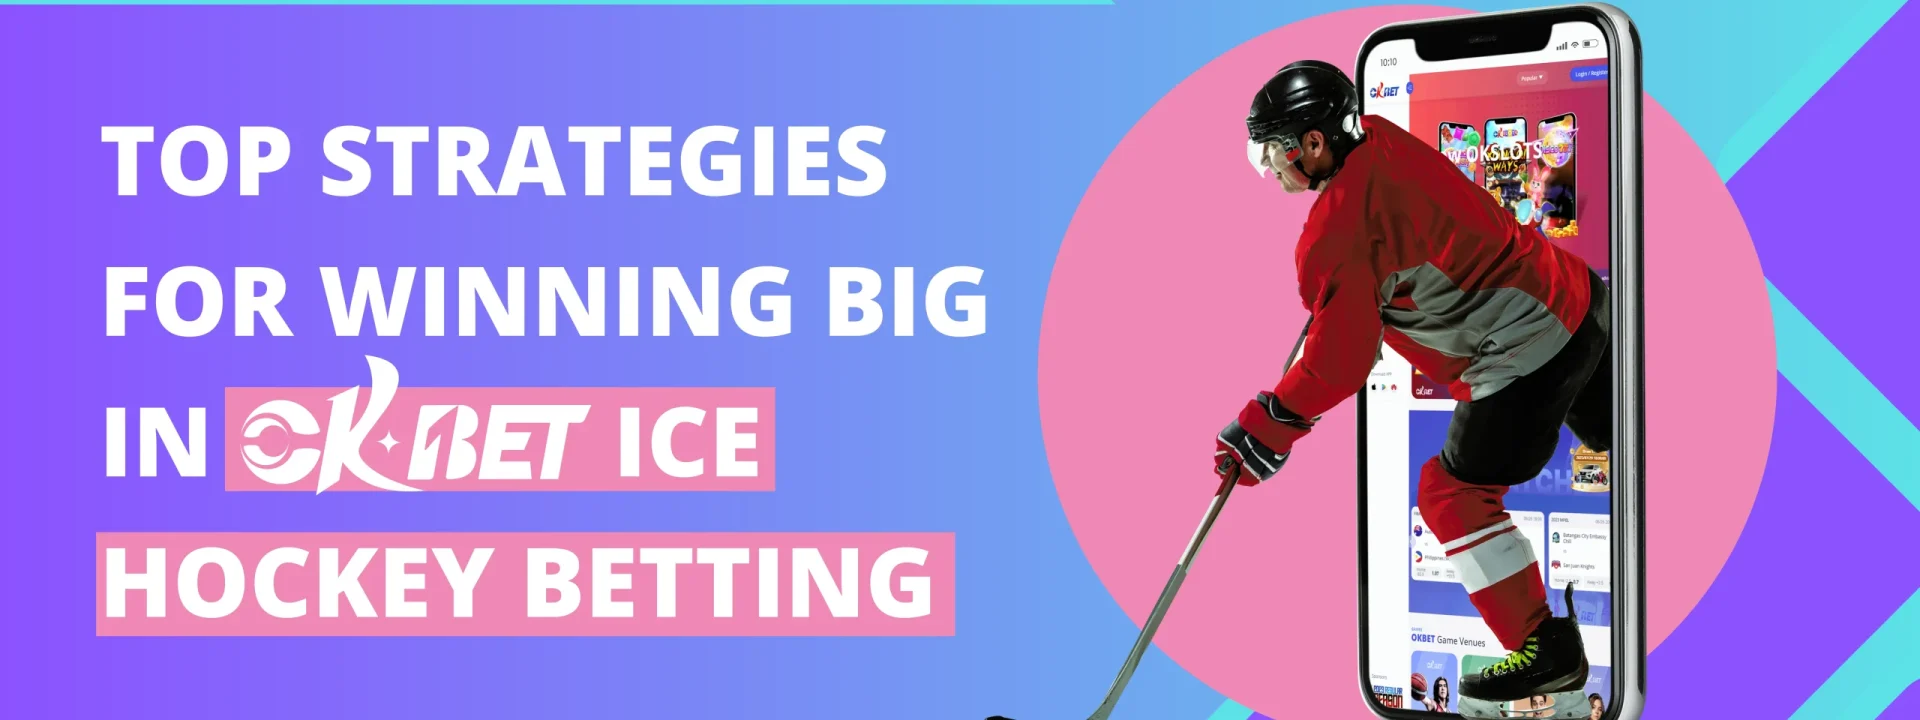 Top Strategies for Winning Big in OKBet Ice Hockey Betting